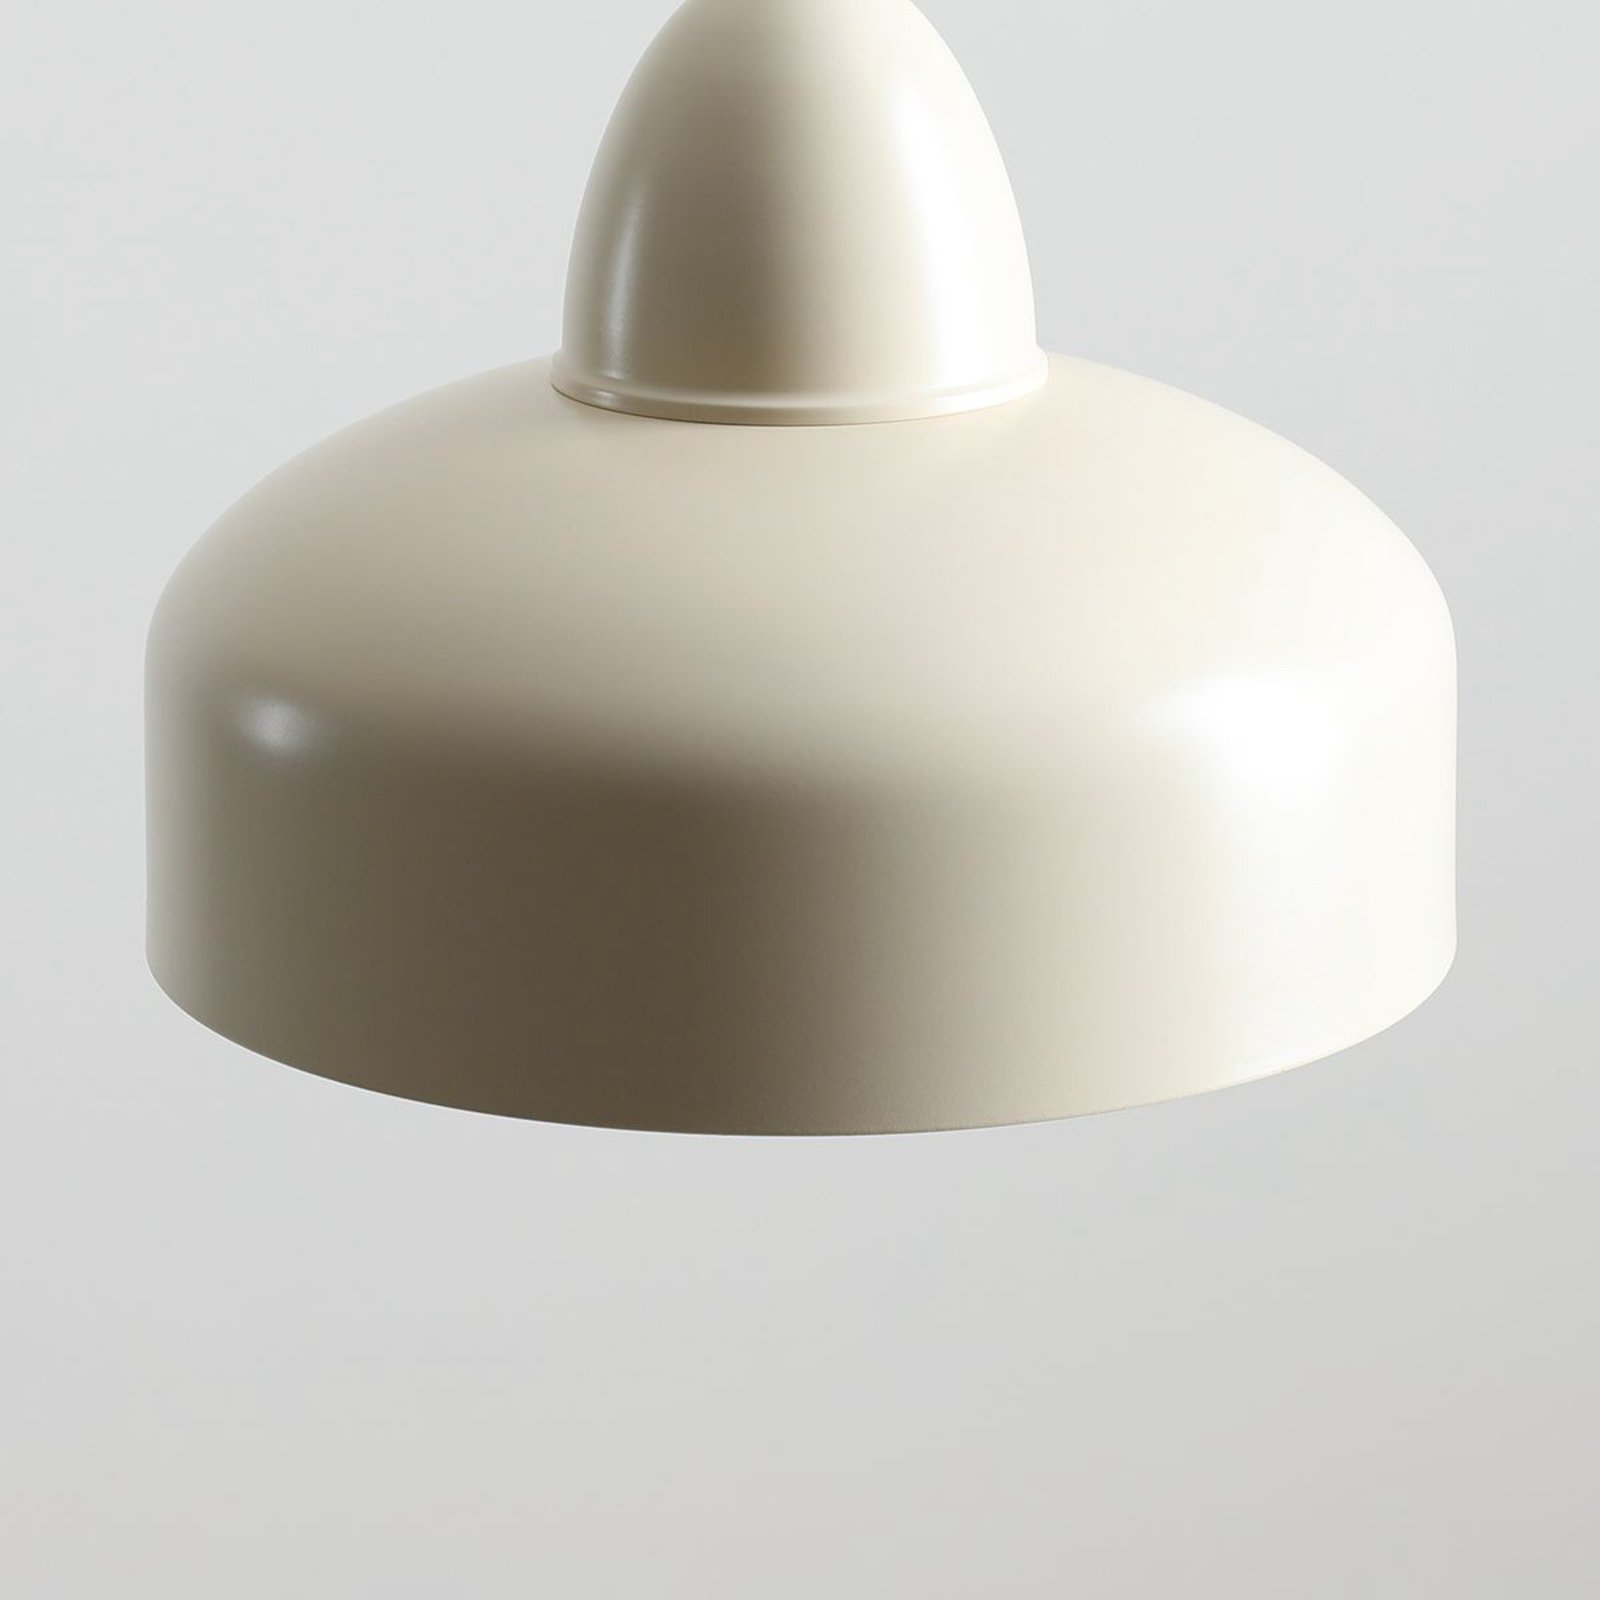 Hanglamp Mille, 1-lamp, crème